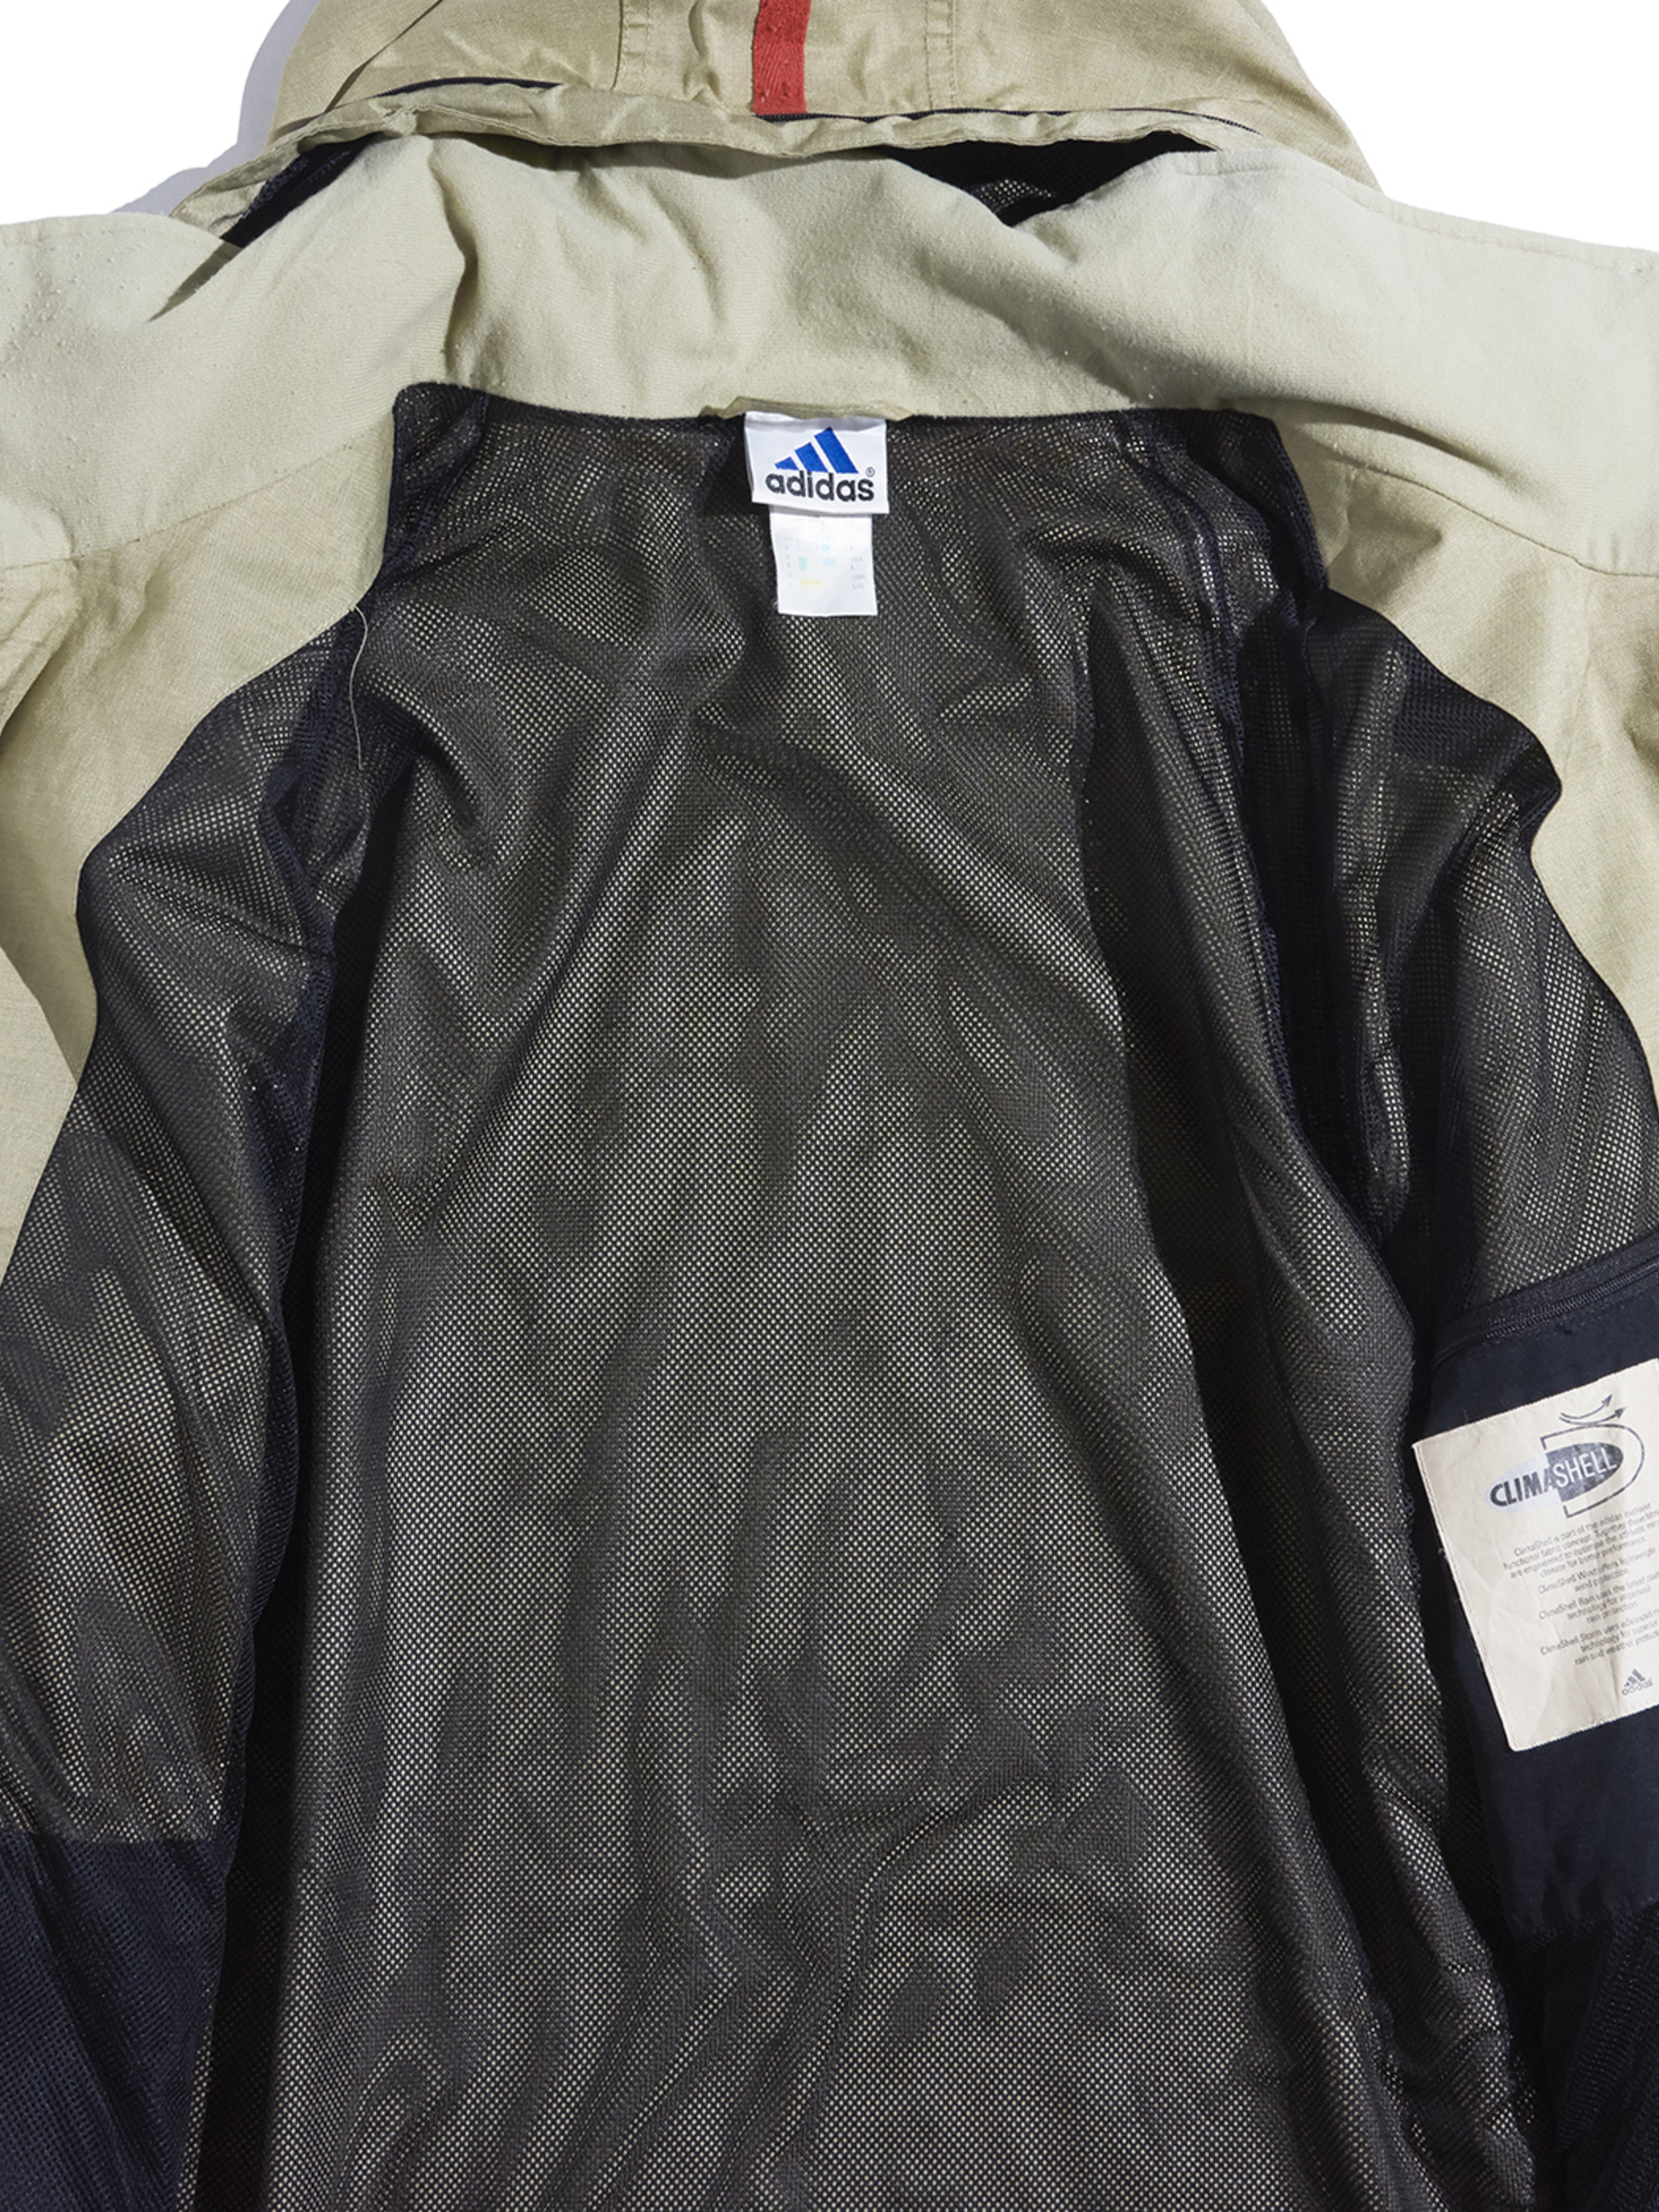 1990s "adidas"  CLIMA SHELL storm jacket -BEIGE-